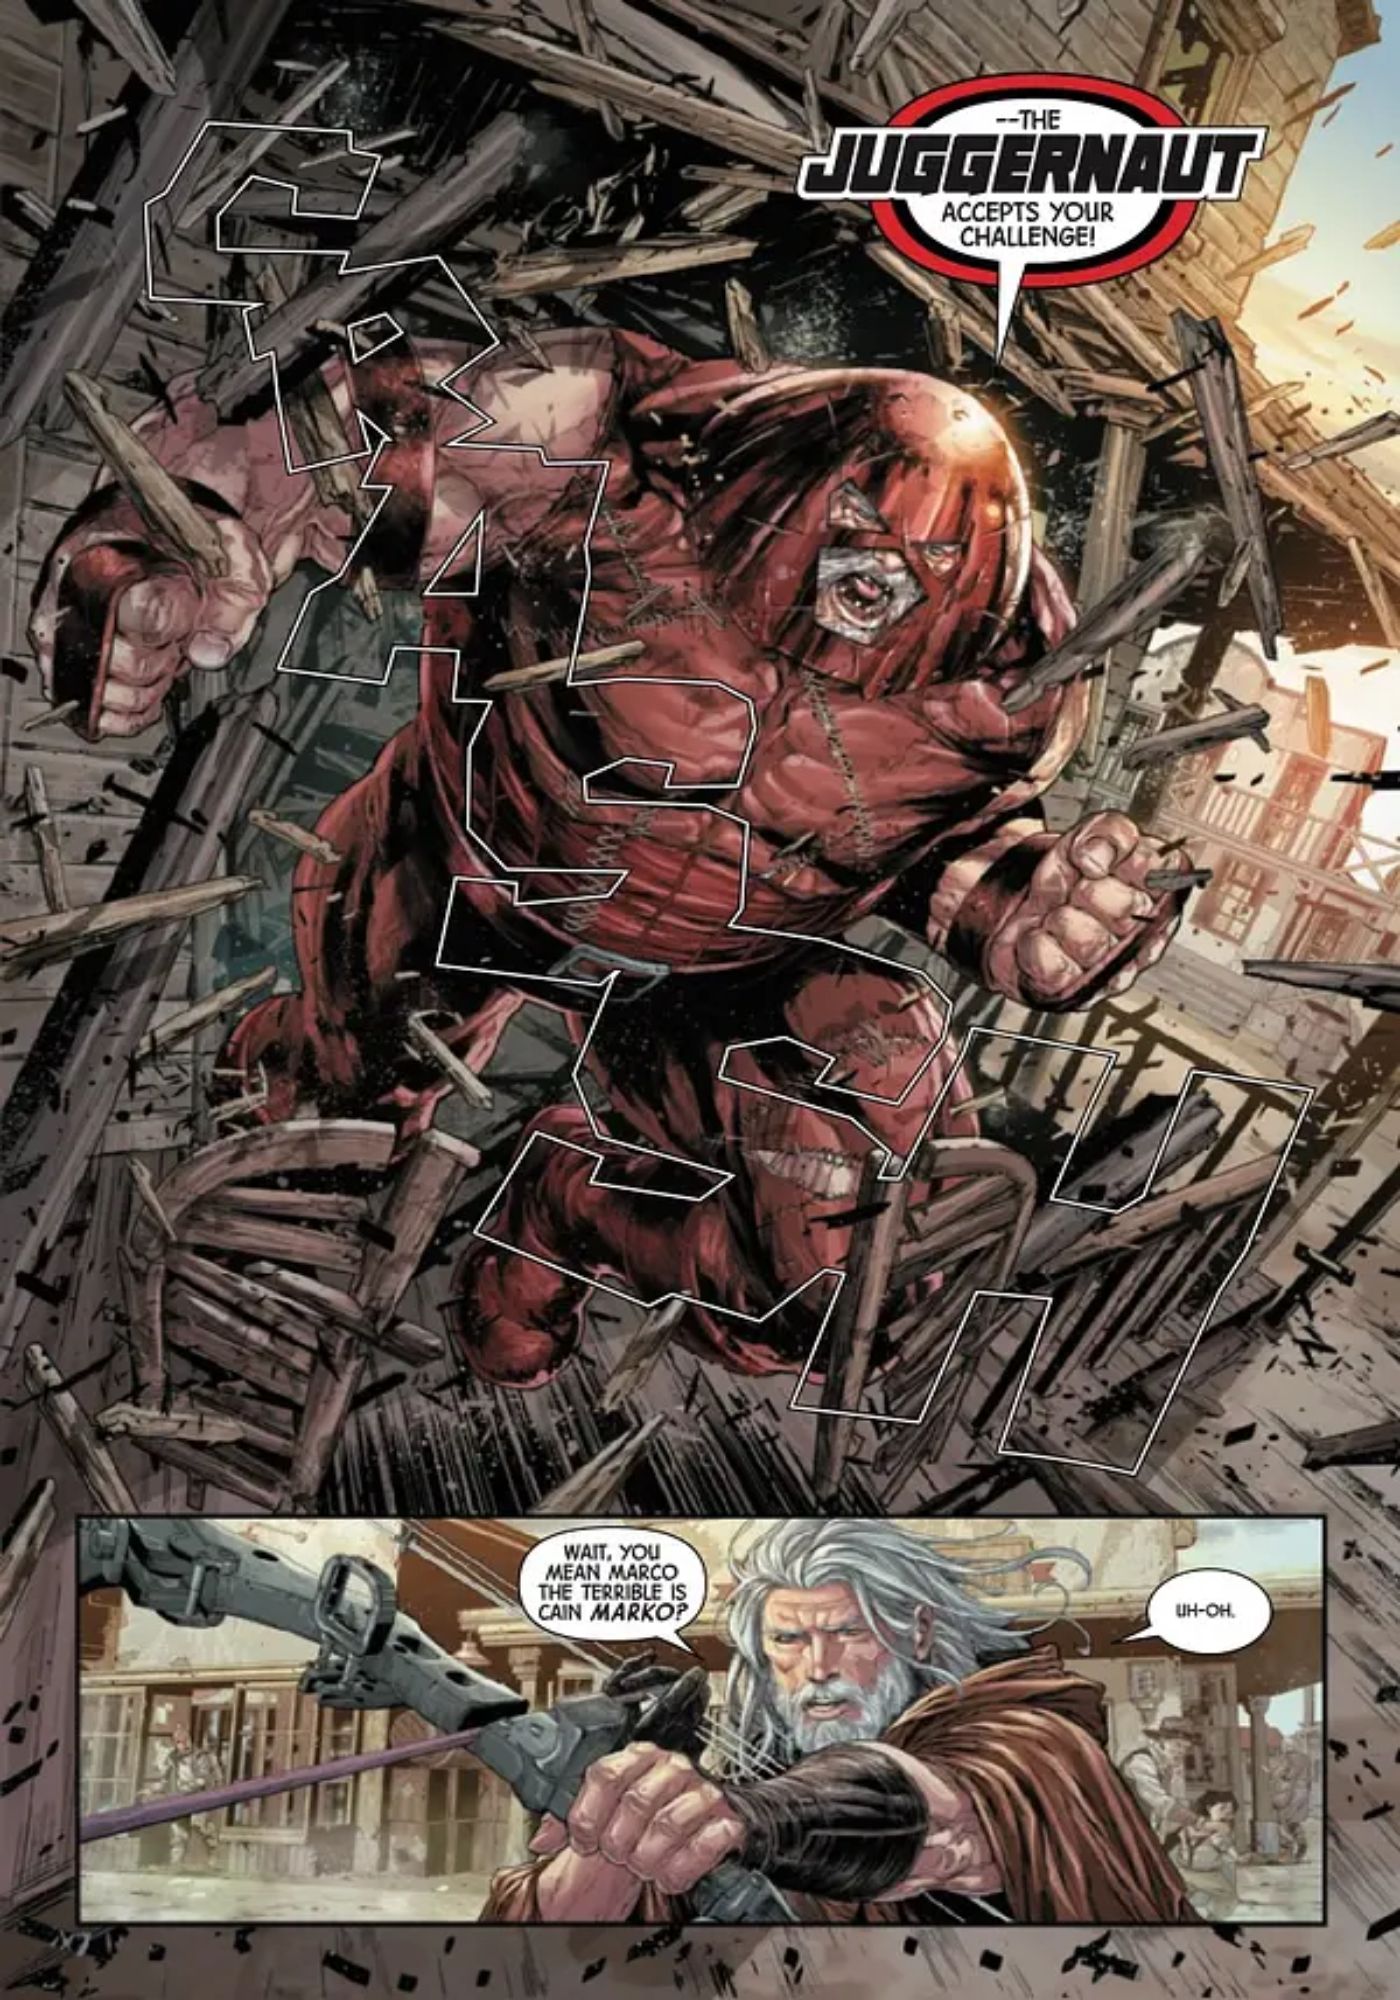 Juggernaut Gets A New Name in Marvels Old Man Logan Future